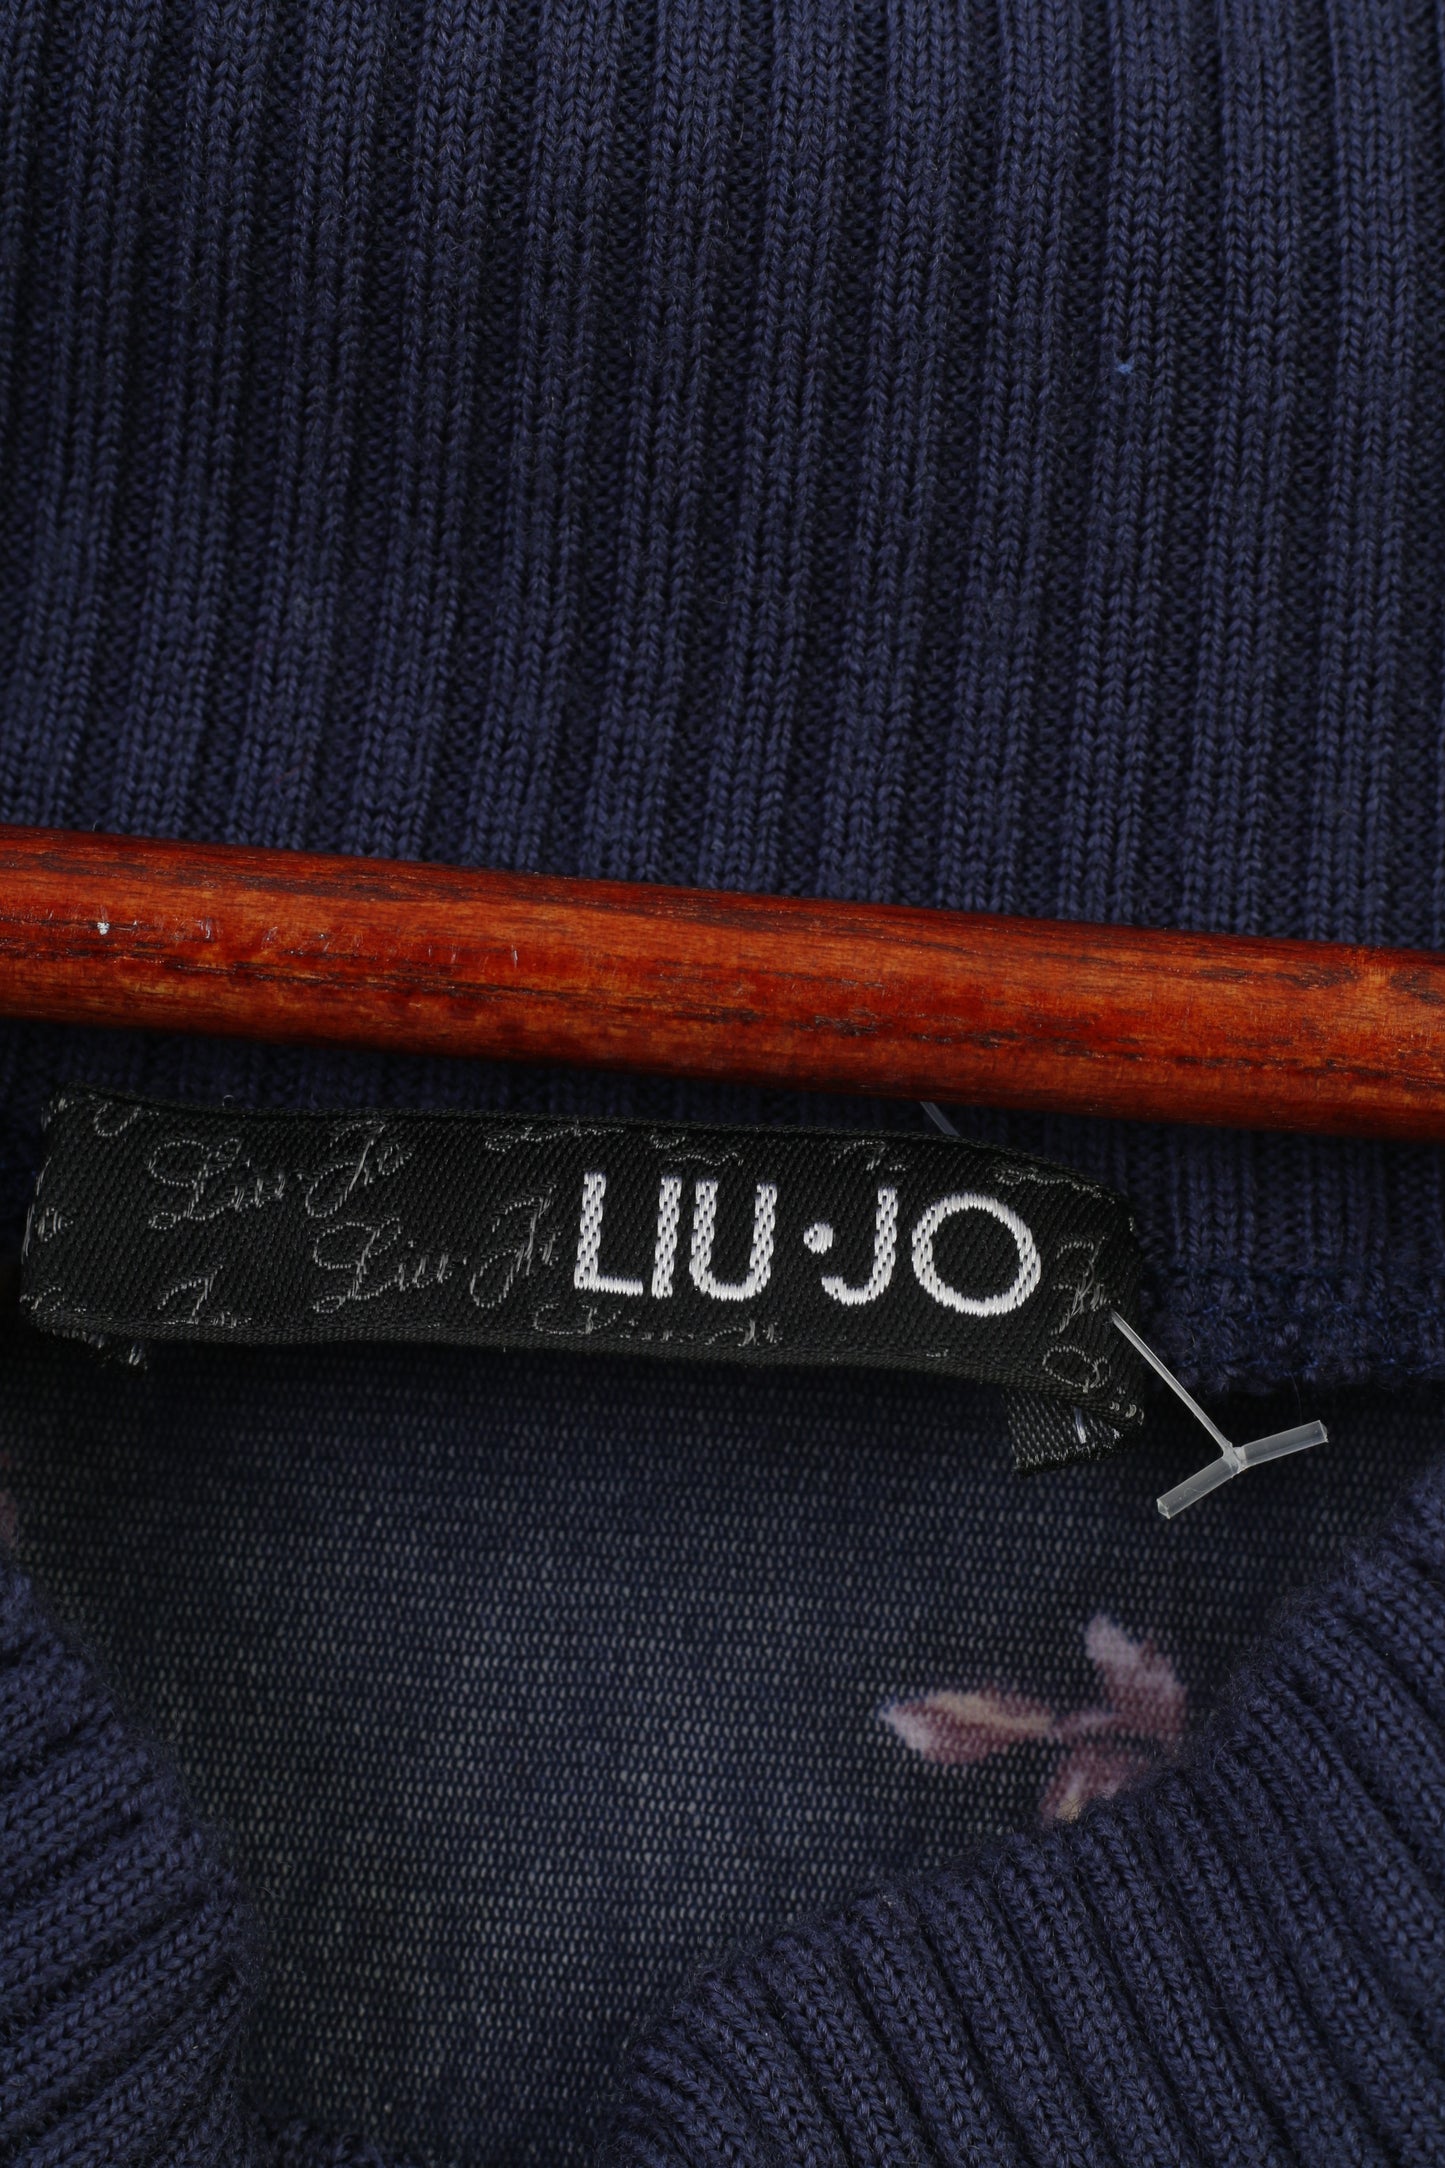 Liu Jo Woman M Dress Navy Petit Flower Print Long Sleeve Lining Mini Golf Casual